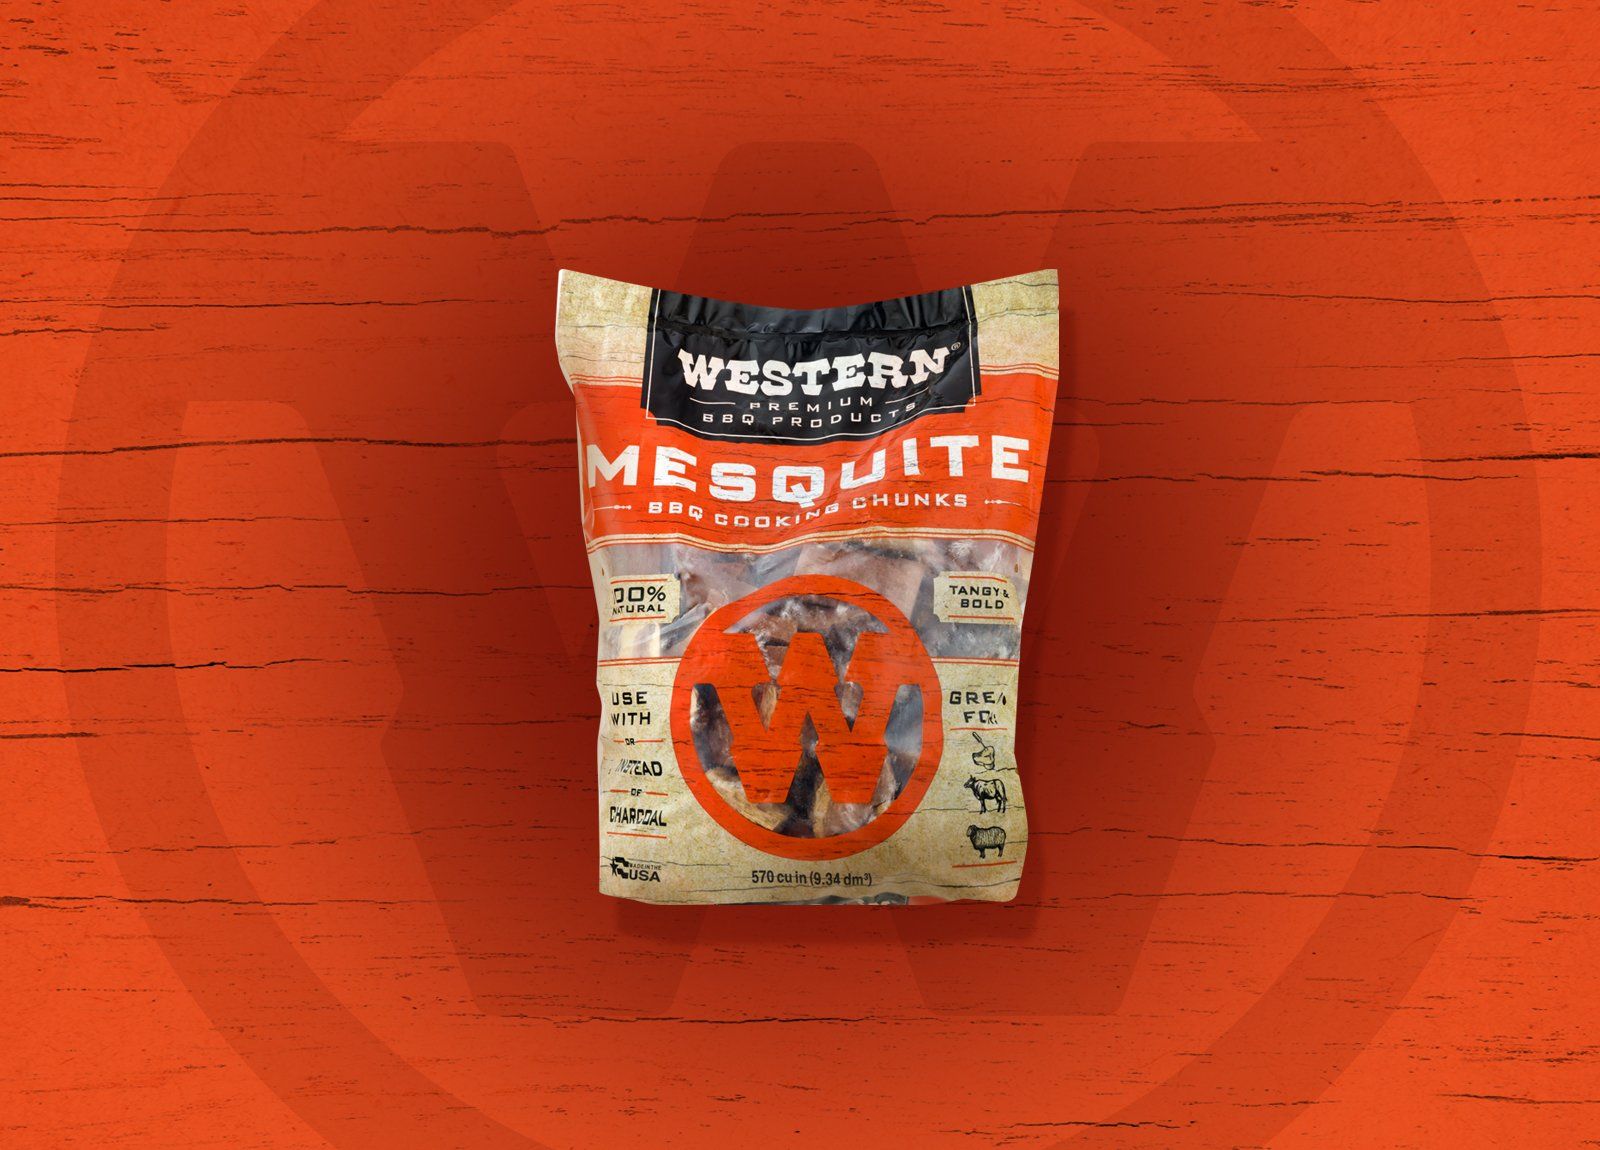 Bag of Western Mesquite Smoking Chips Bag on an orange background